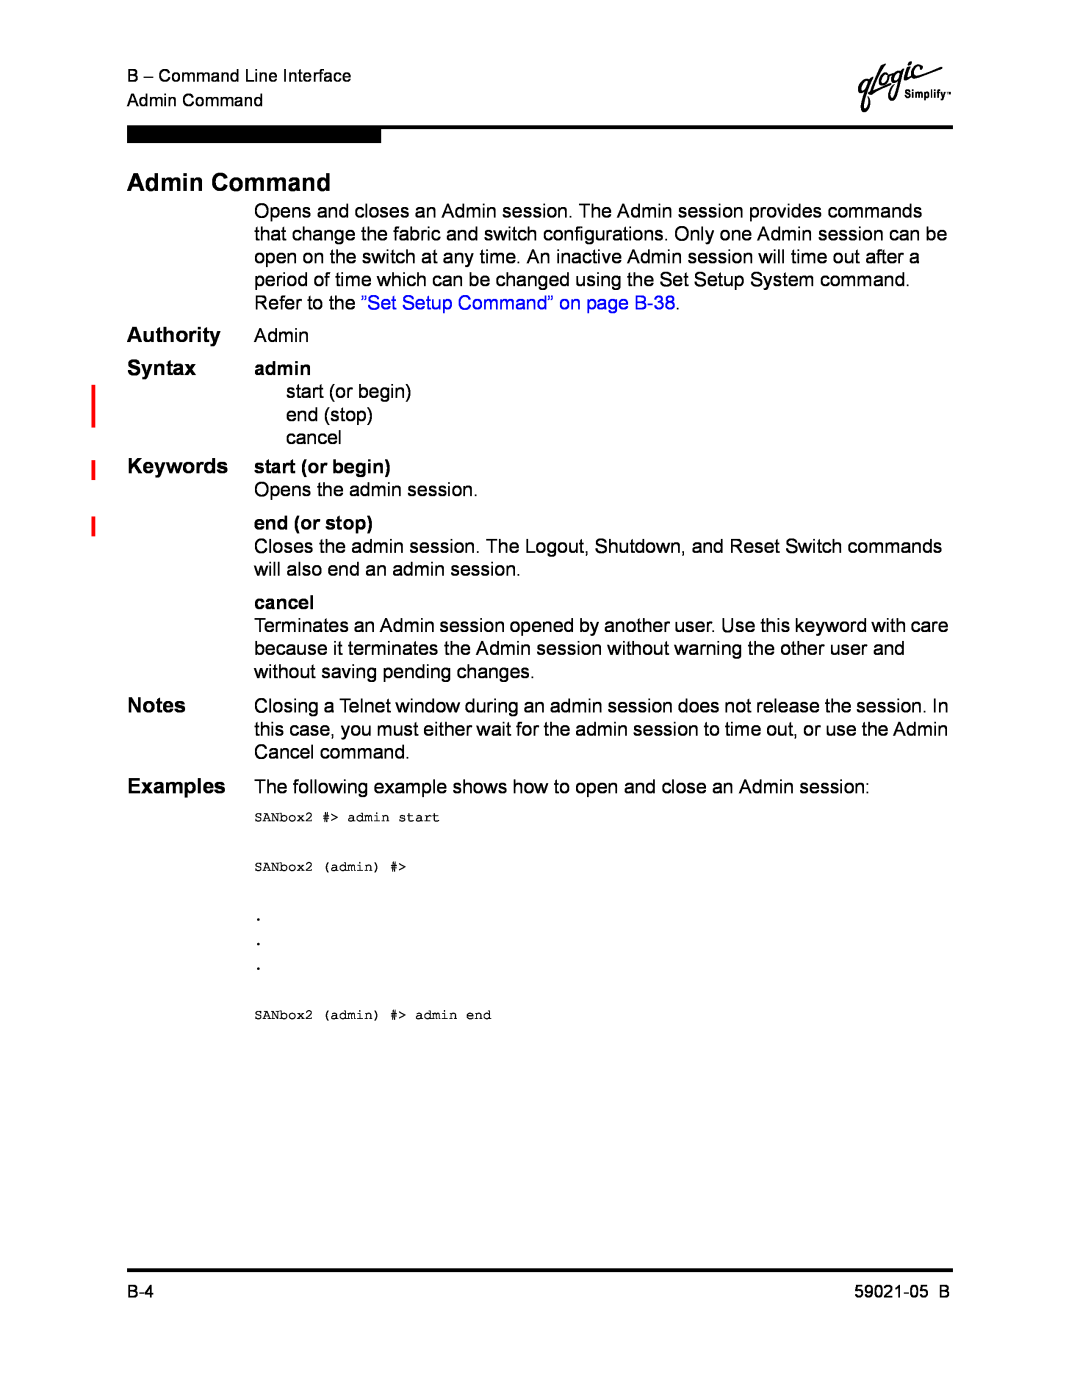 Q-Logic 59021-05 B manual Admin Command, Authority, Syntax, Keywords, Examples 